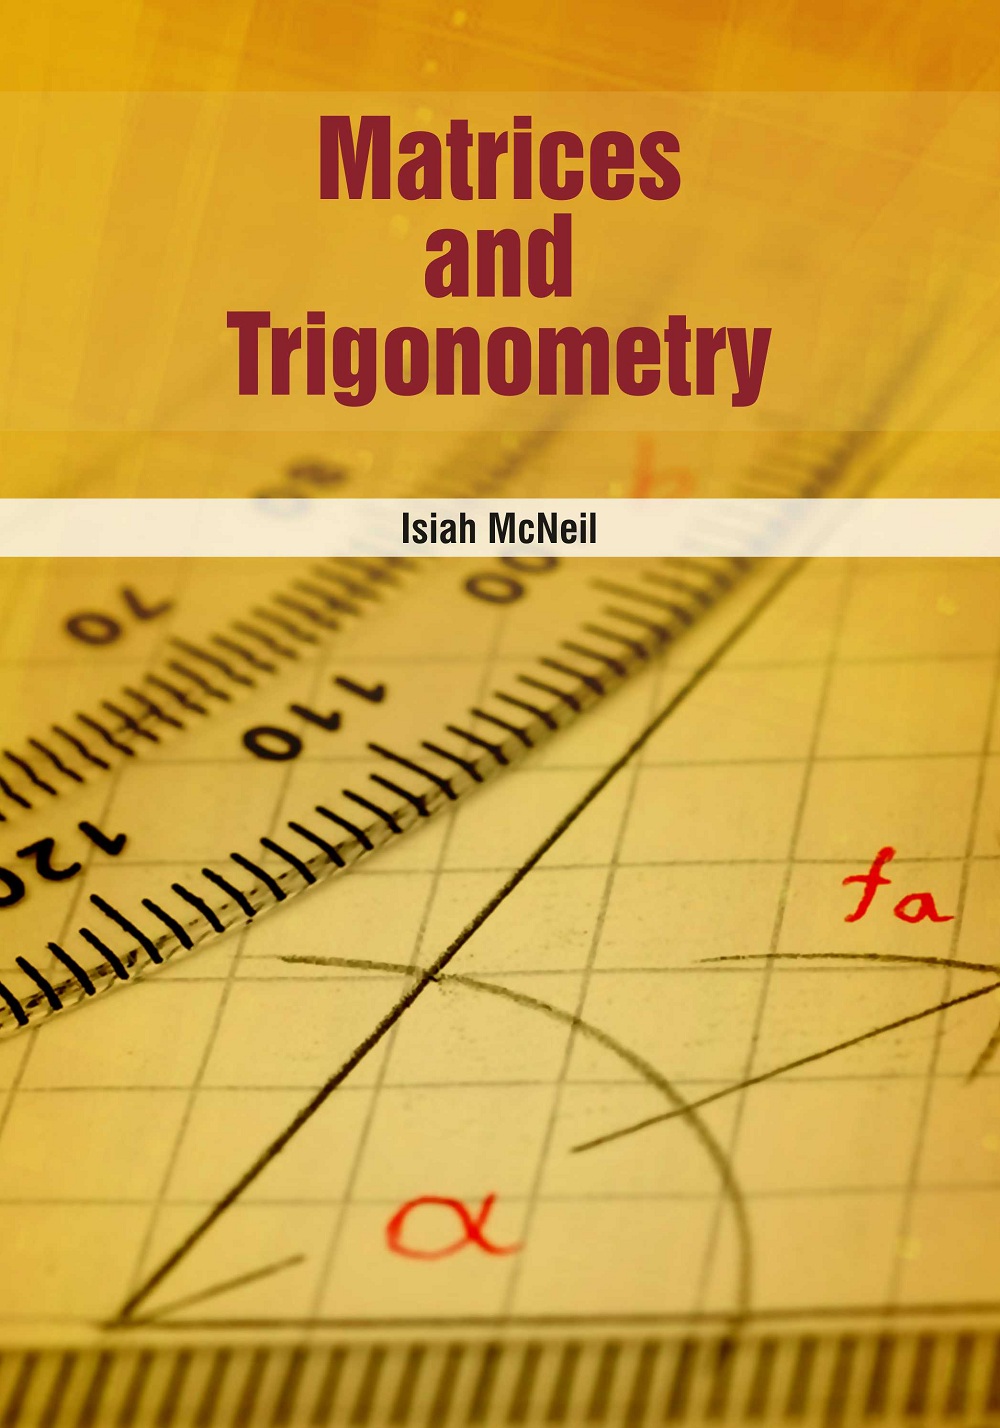 Matrices and Trigonometry